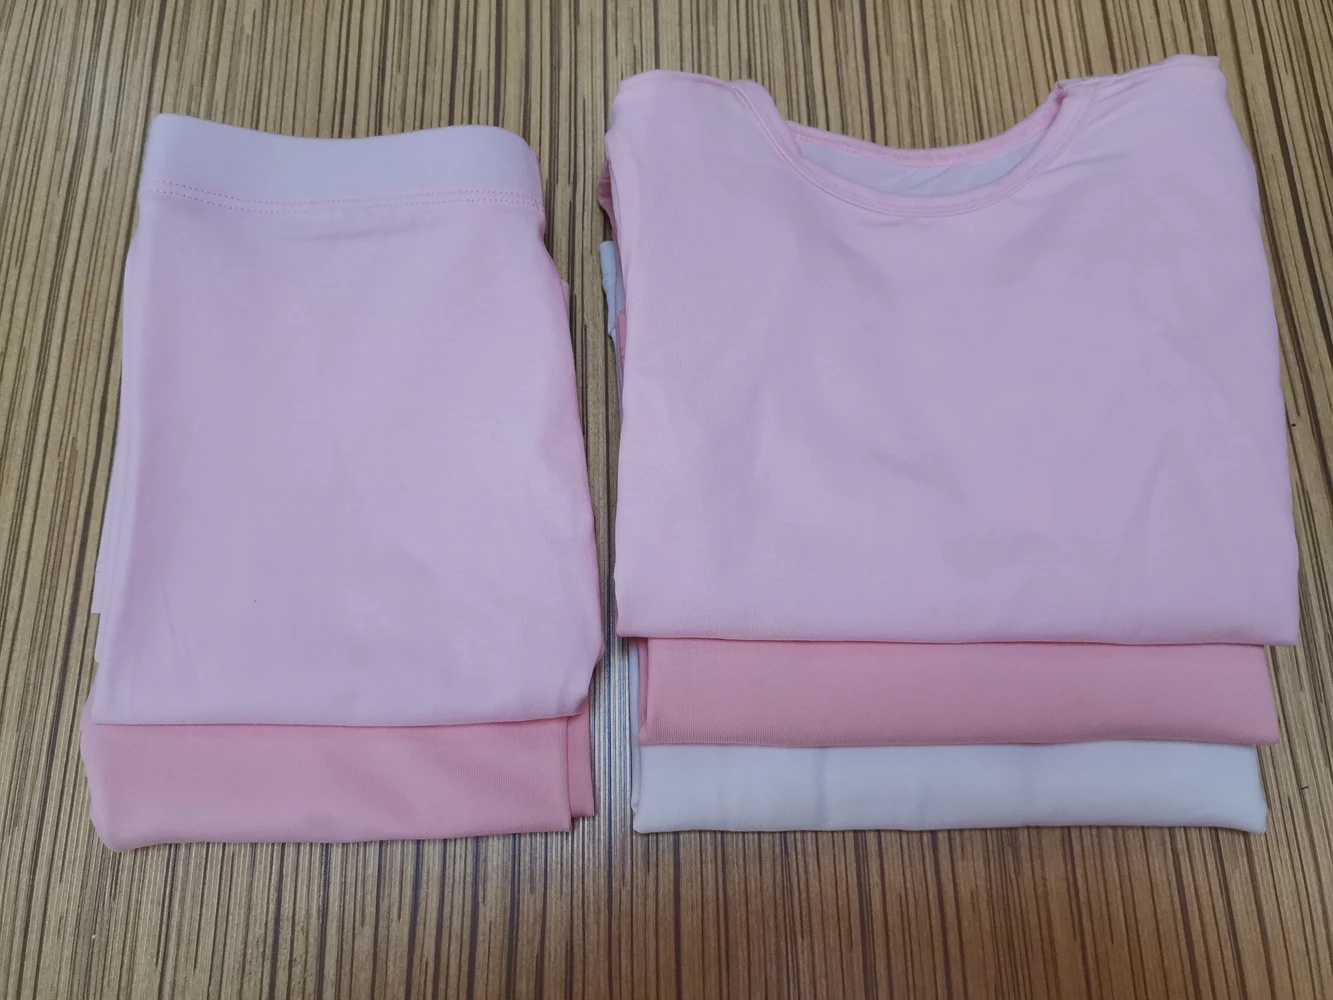 Stocked Girls Long Sleeves T-shirt and Leggings Set Plain Candy Color Kids Pajamas Sets For Infants toddler sleepwear pjs